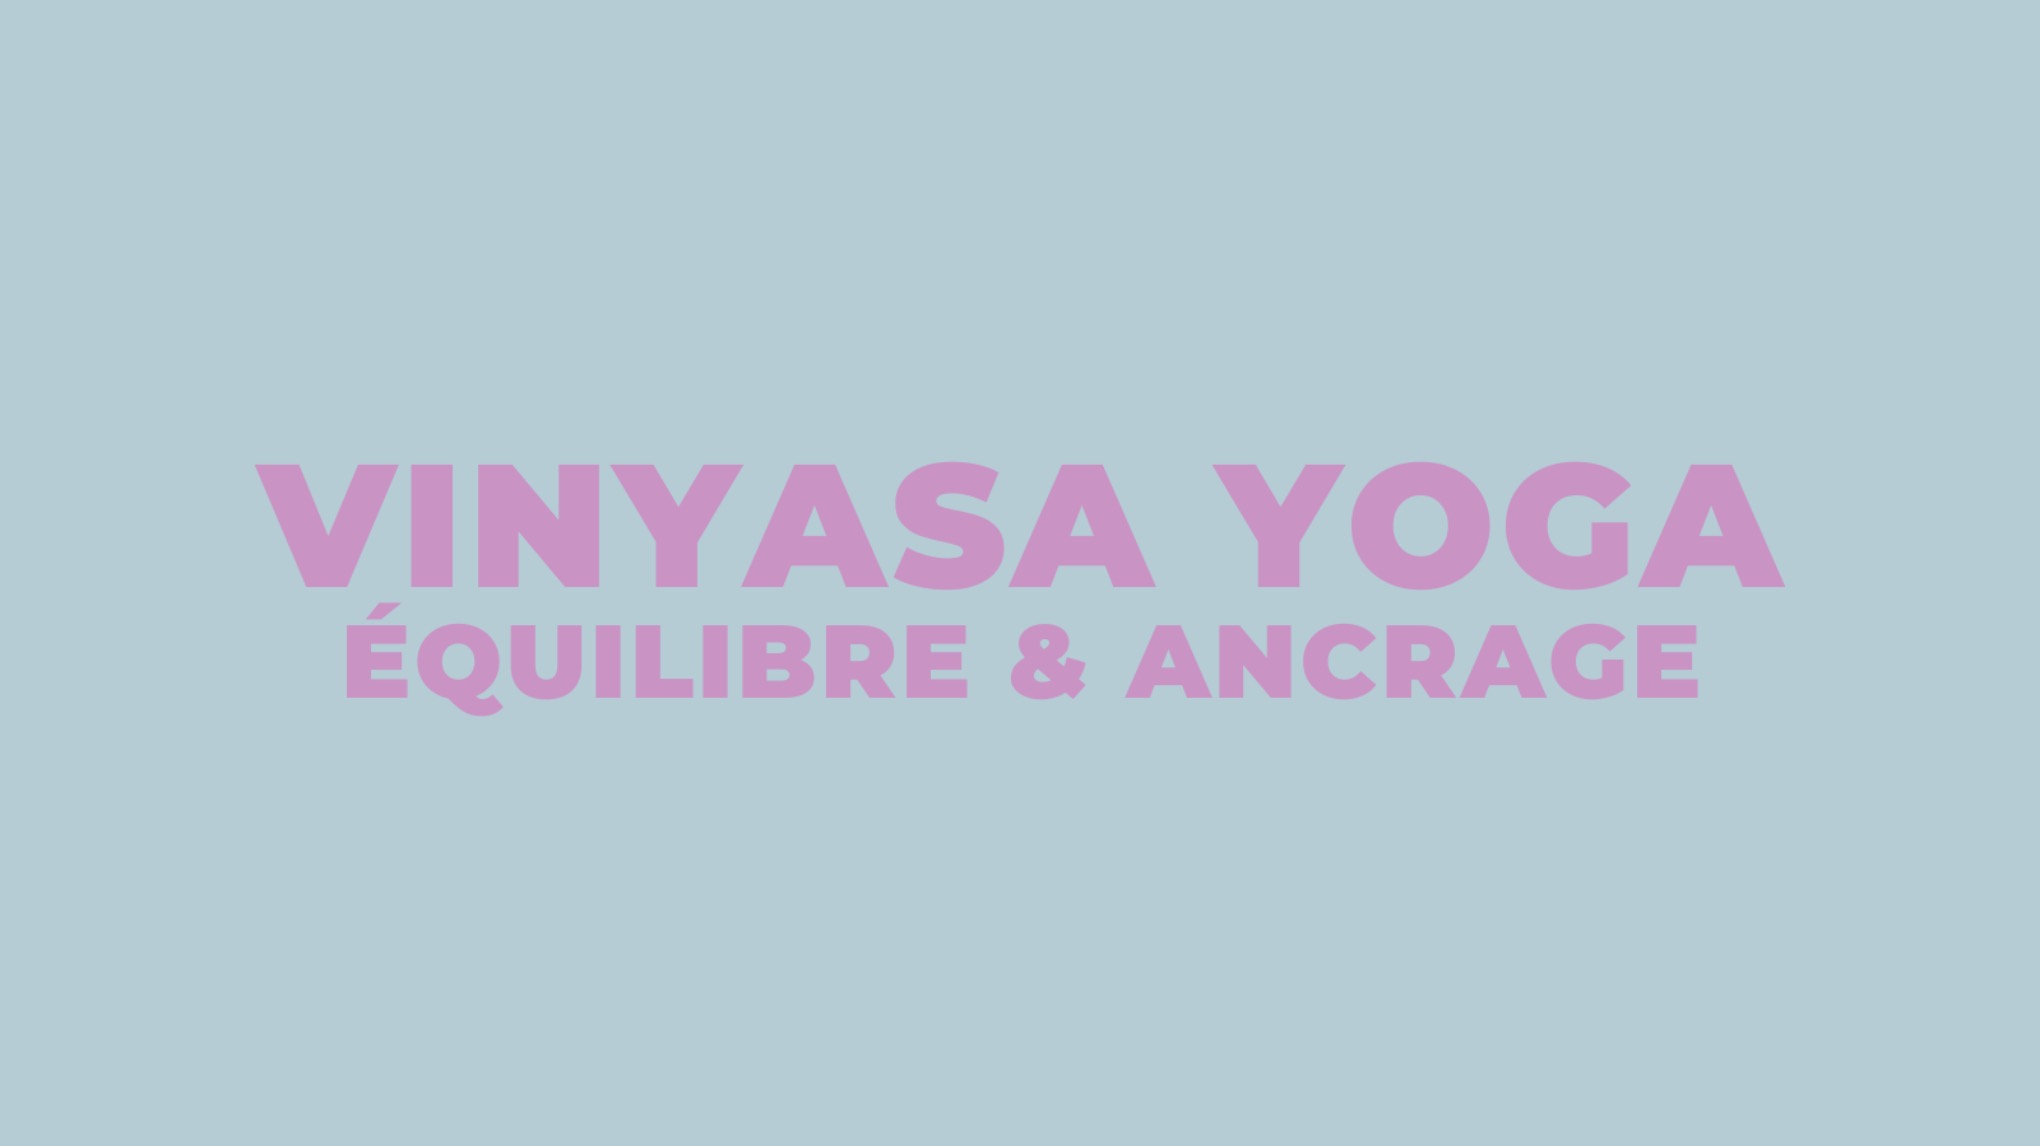 Vinyasa Yoga - Equilibre & Ancrage